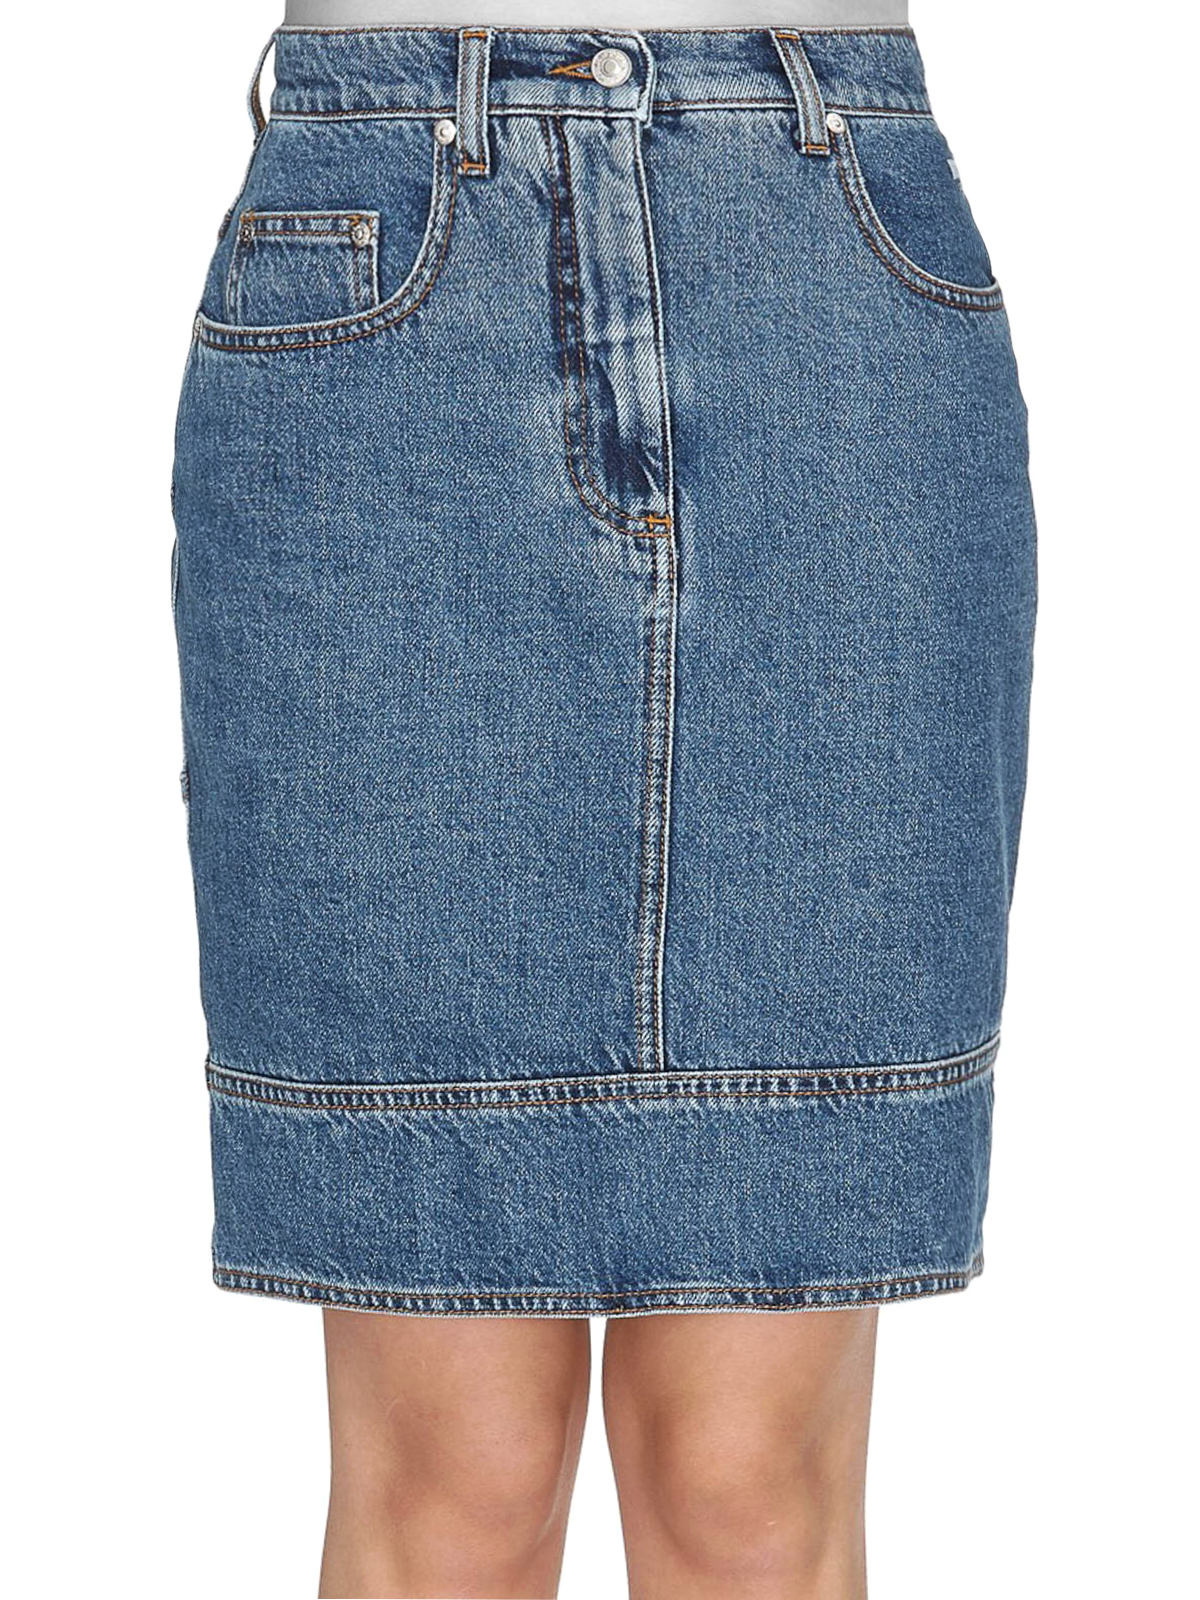 knee length skirts jean